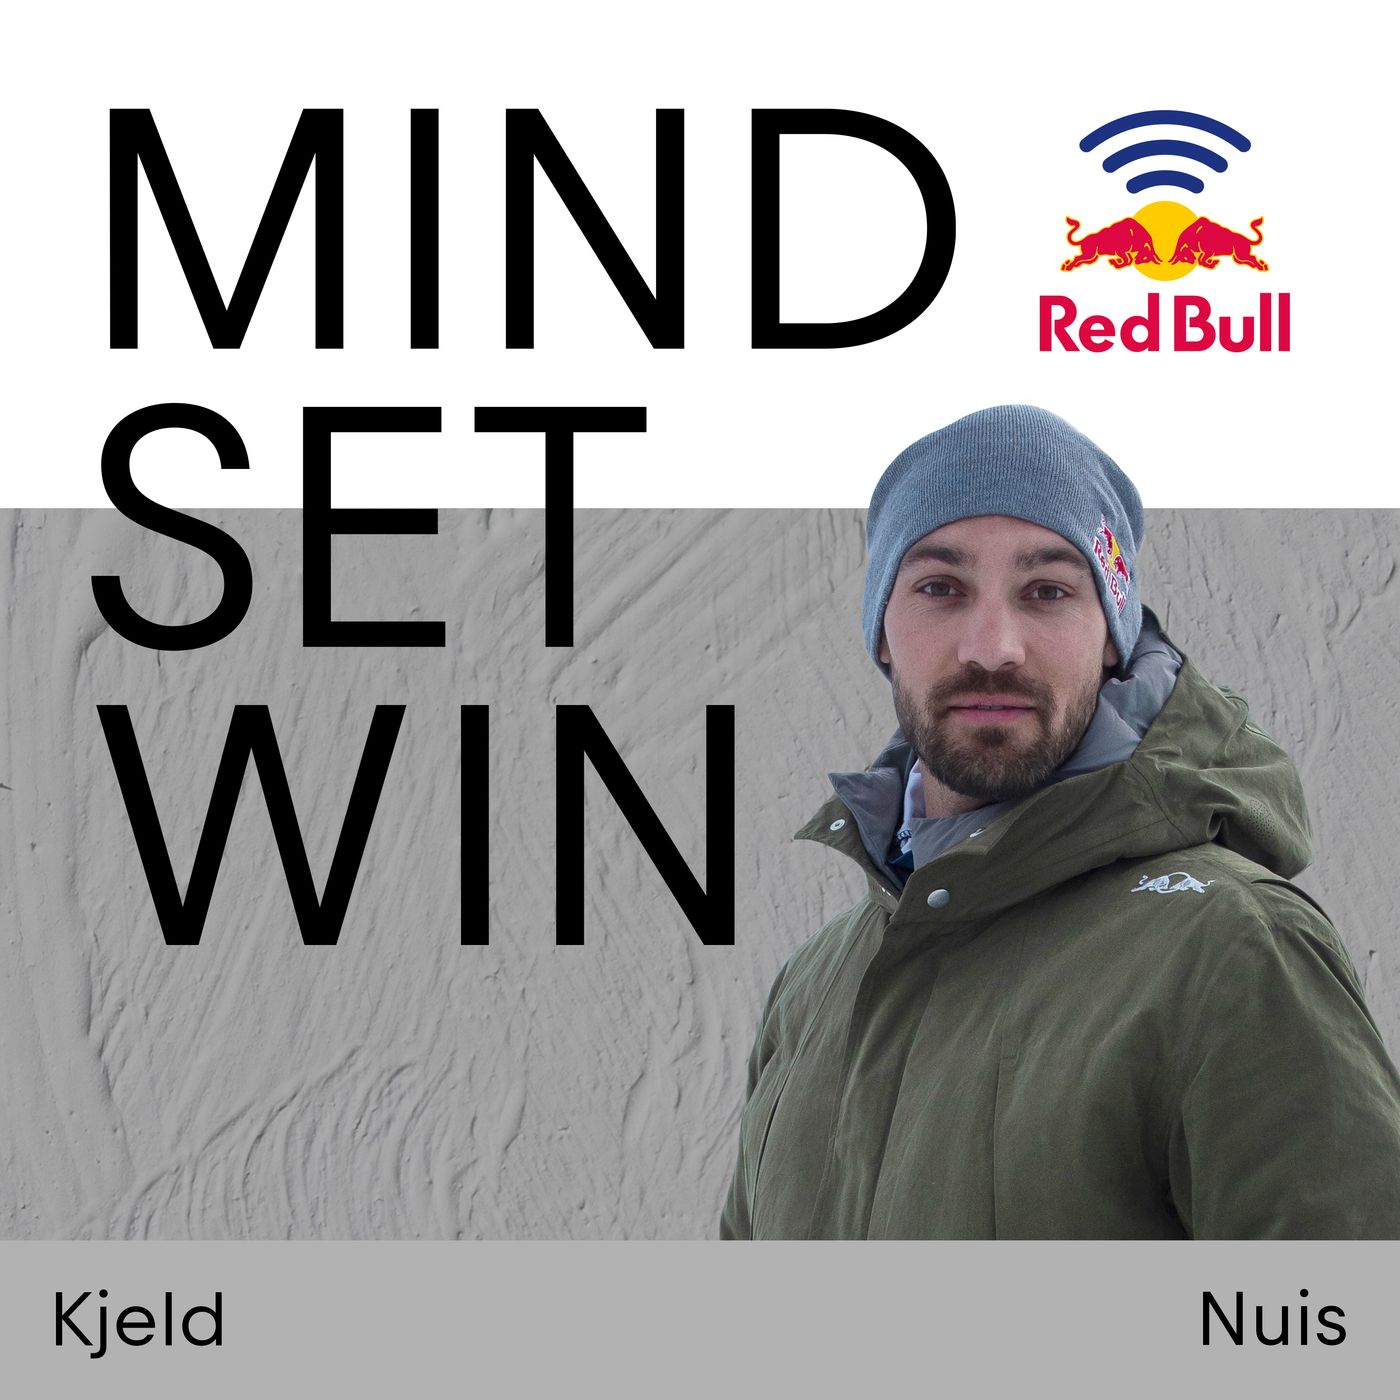 Elite speed skater Kjeld Nuis – identifying and accepting emotions